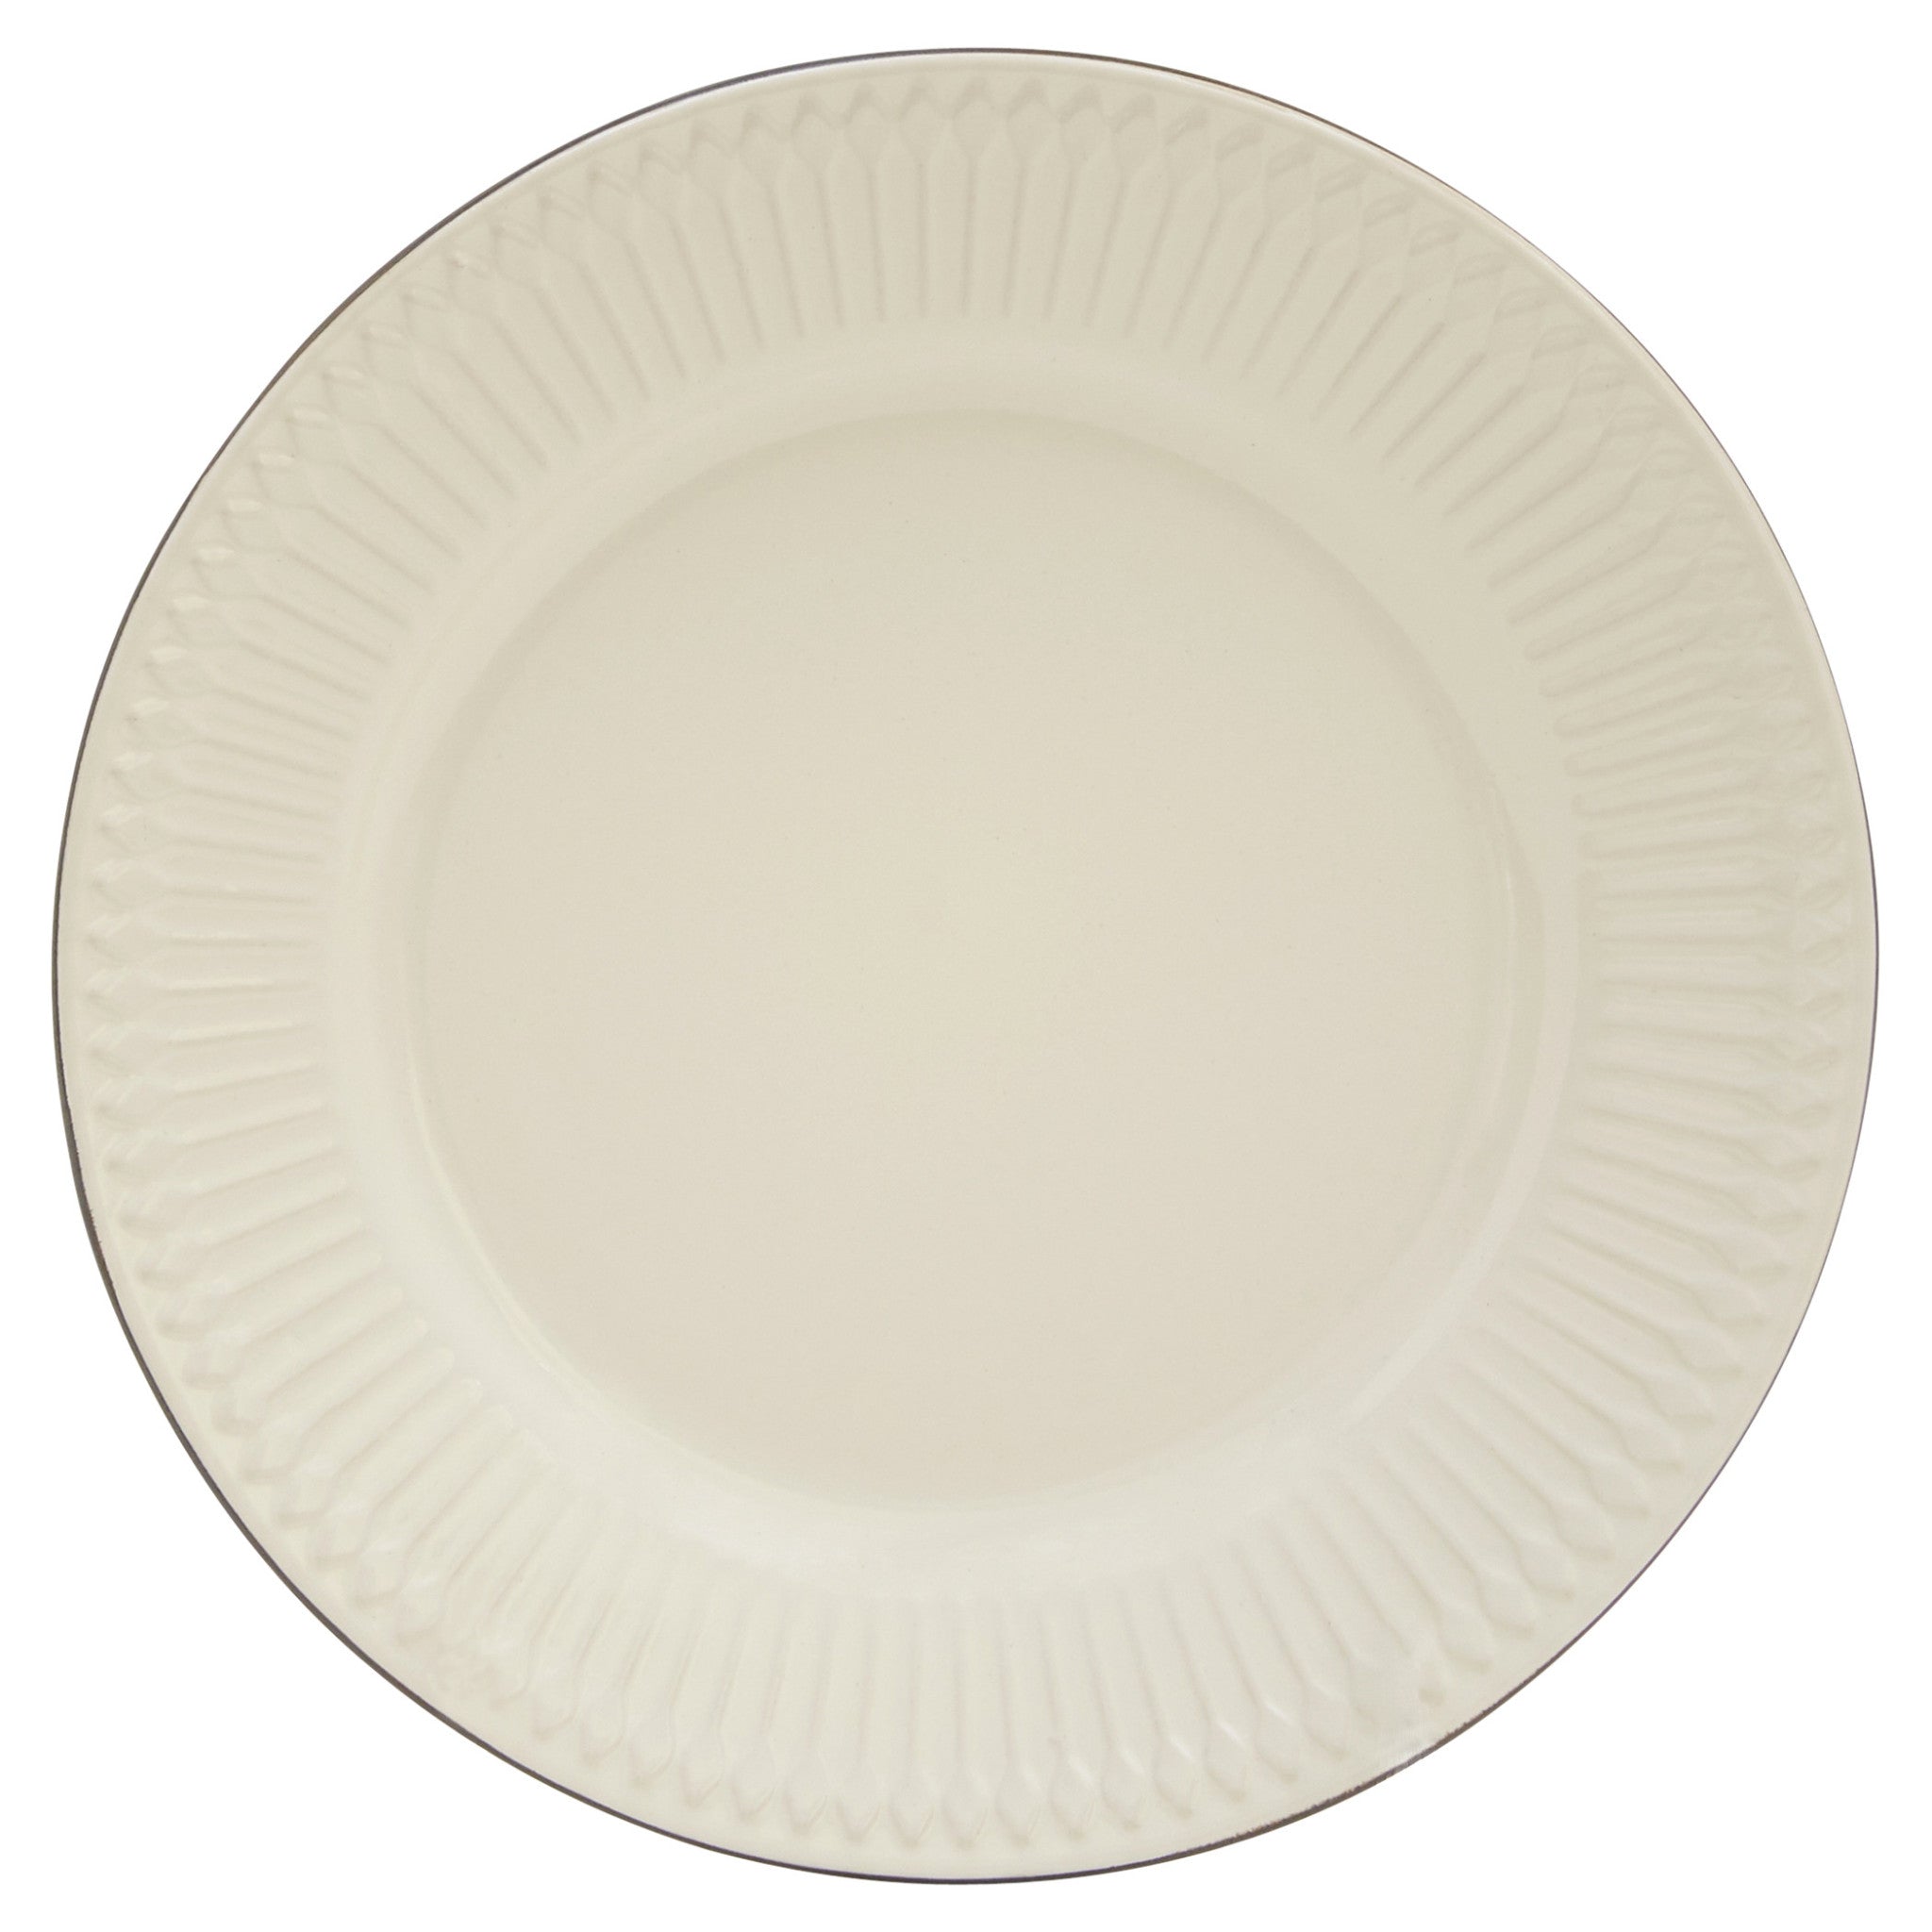 Ivory Sixteen Piece Ceramic Service For Four Dinnerware Set